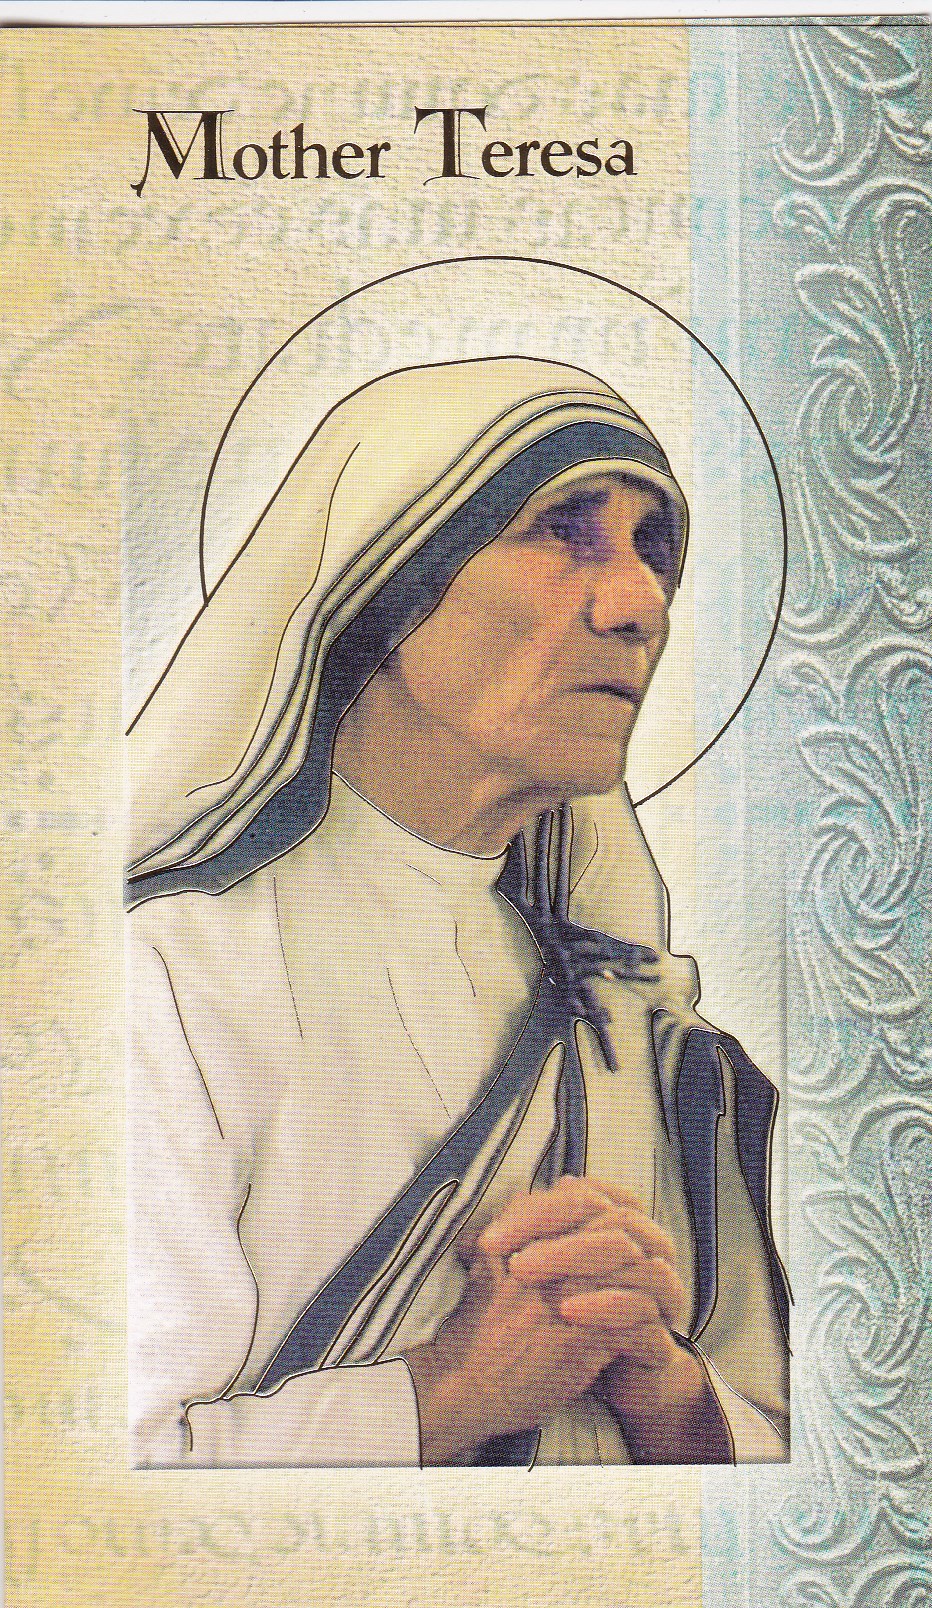 Image for Mother Teresa